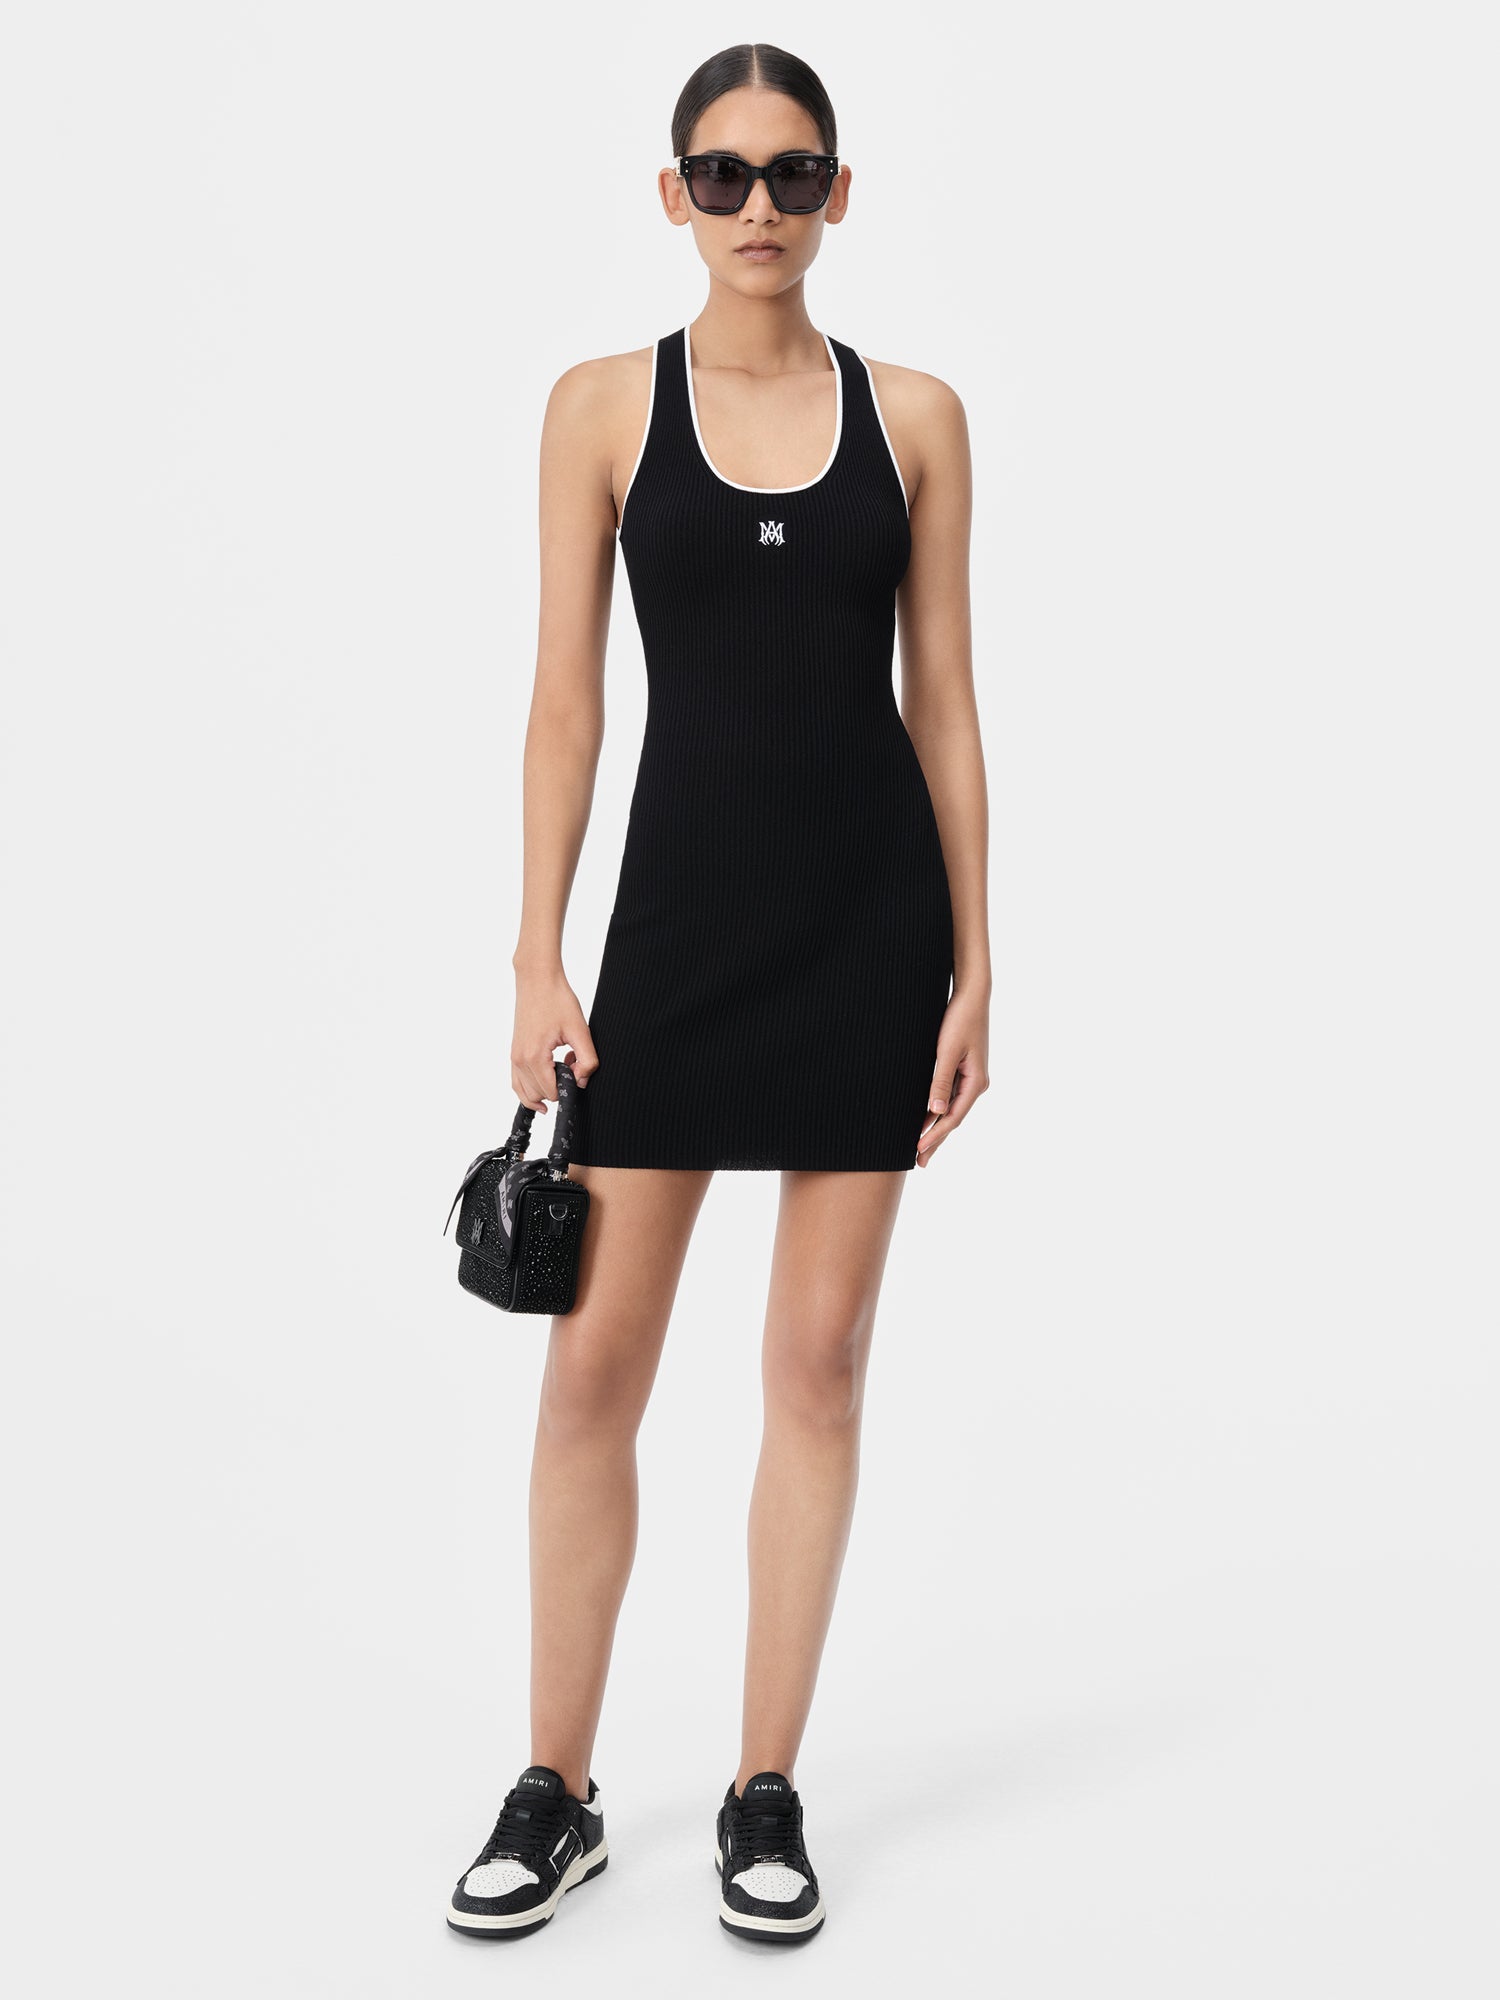 Product WOMEN - MA MINI DRESS - Black featured image